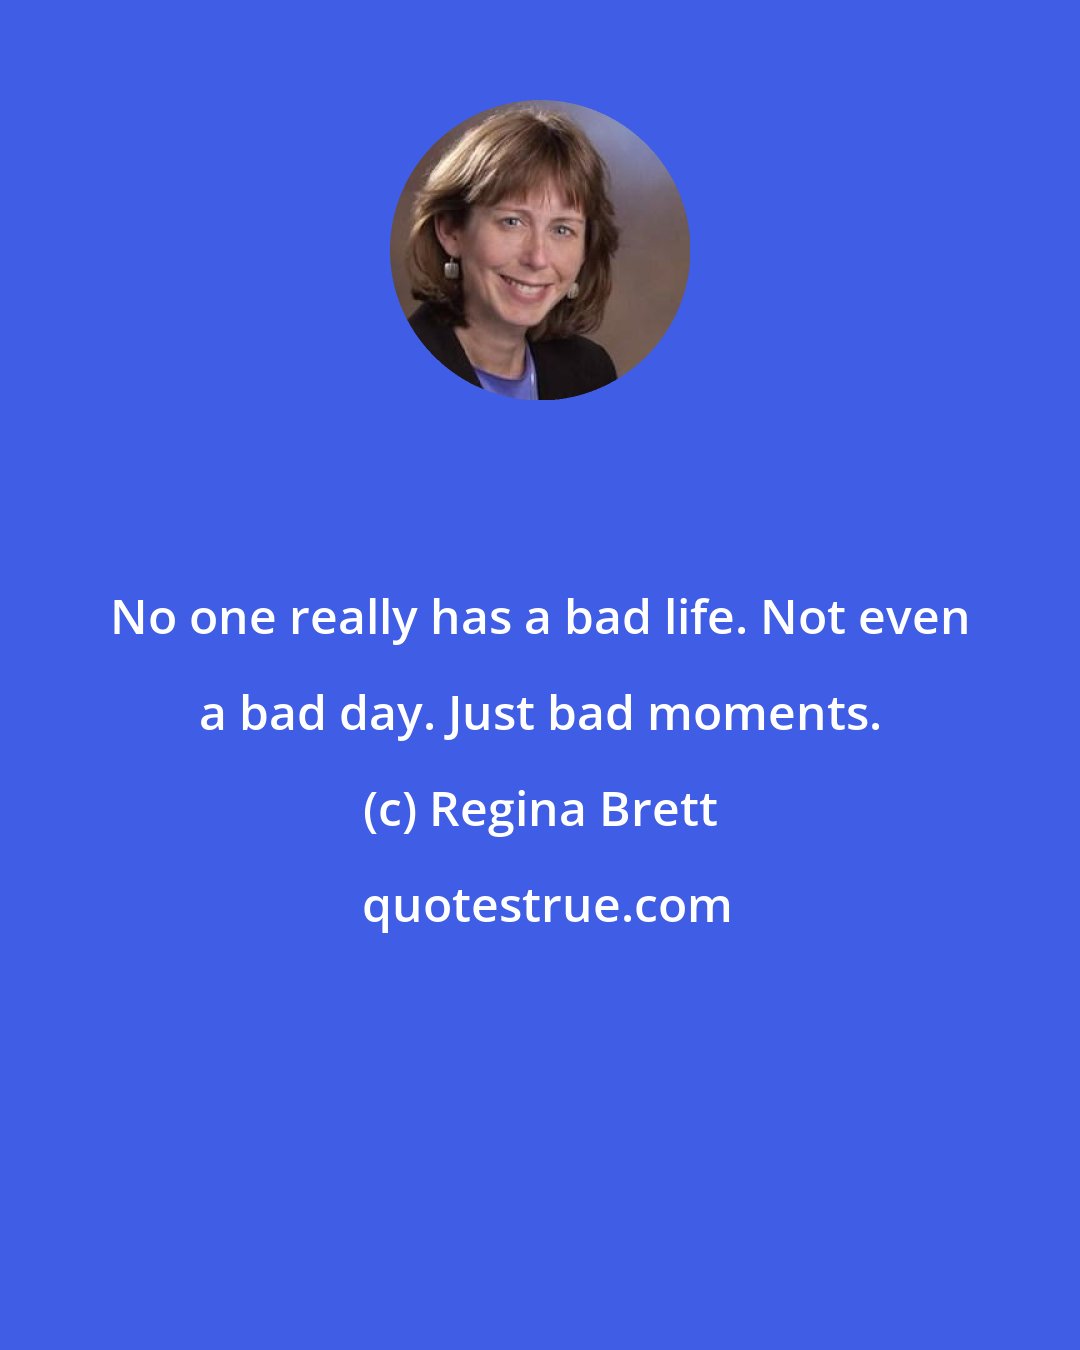 Regina Brett: No one really has a bad life. Not even a bad day. Just bad moments.